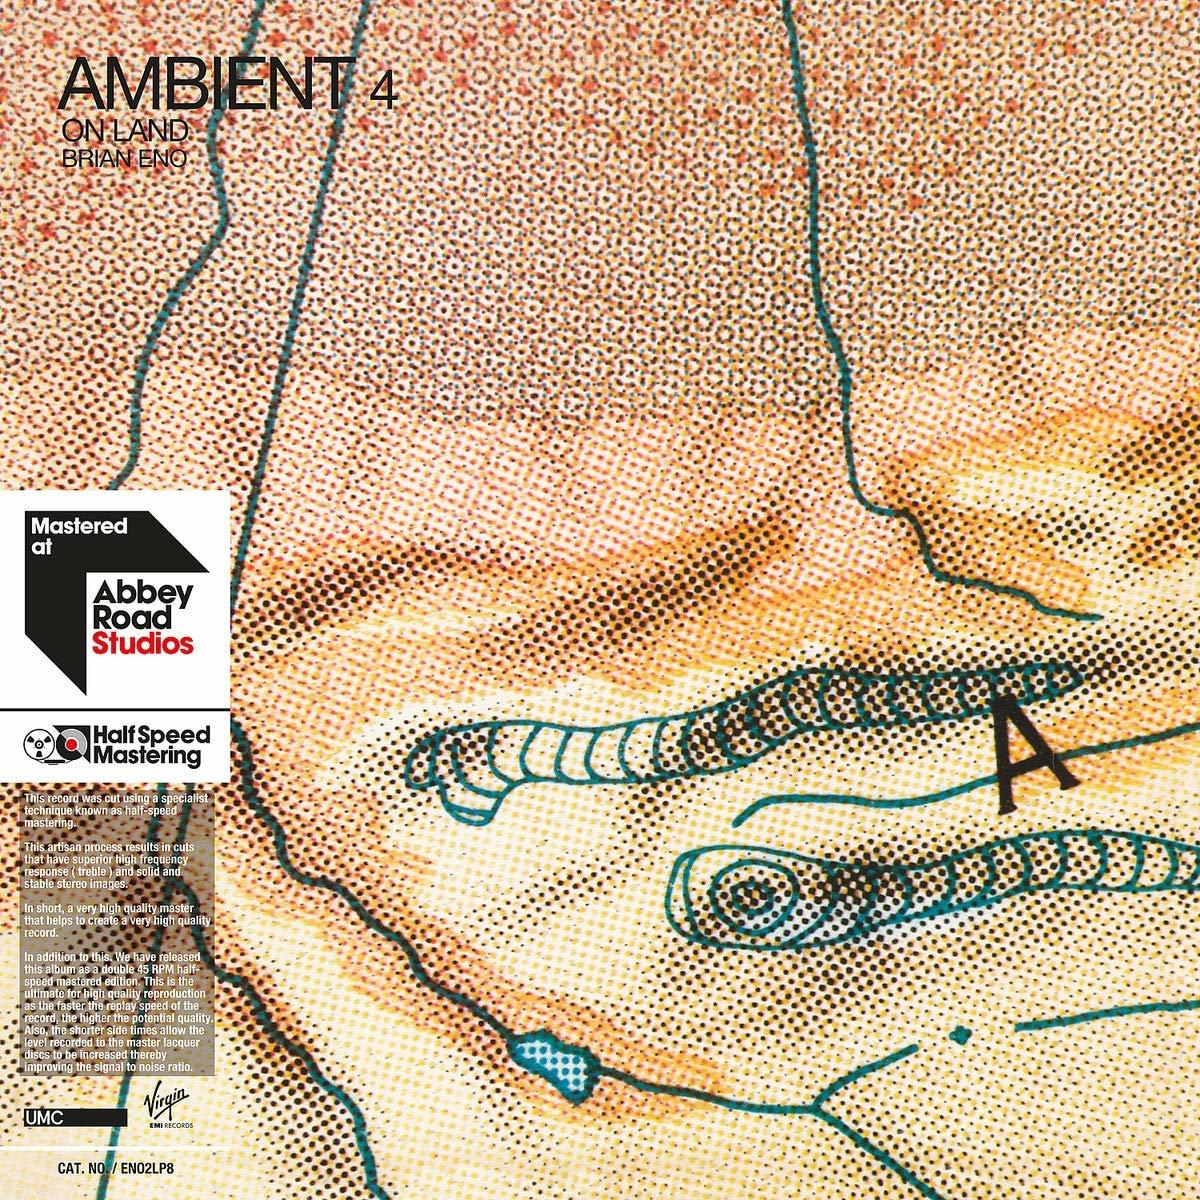 - Brian (Vinyl) On Ambient 4: Land - (Vinyl) Eno